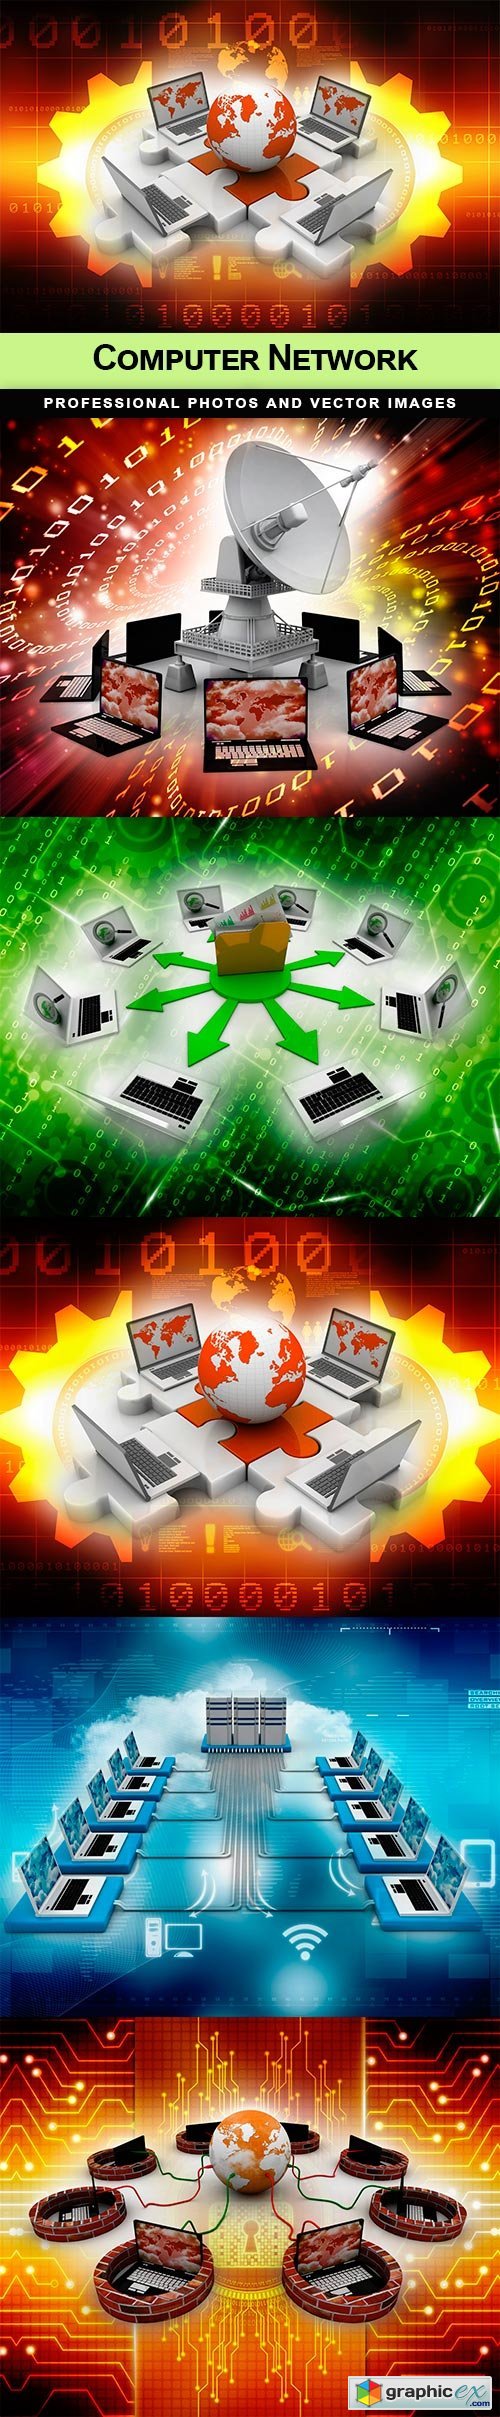 Computer Network - 5 UHQ JPEG